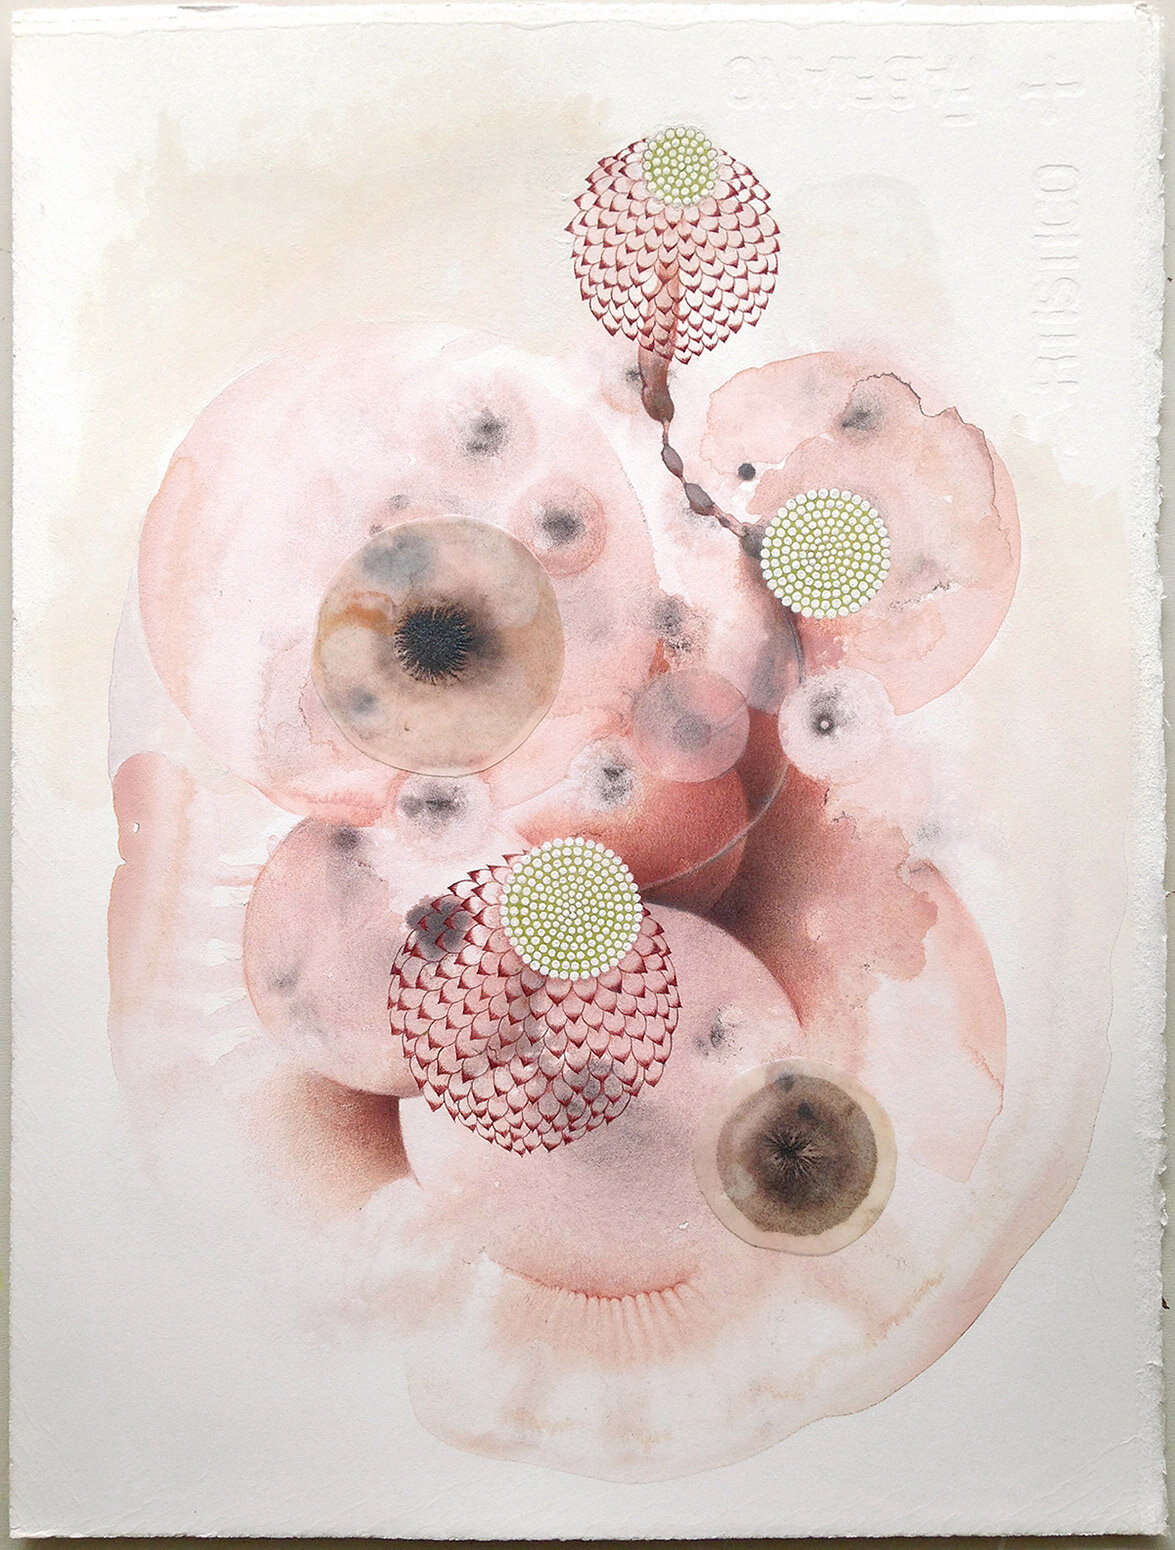   Blush (lotus) , 2012 acrylic, mica, gouache, colored pencil on paper 14” x 11” 